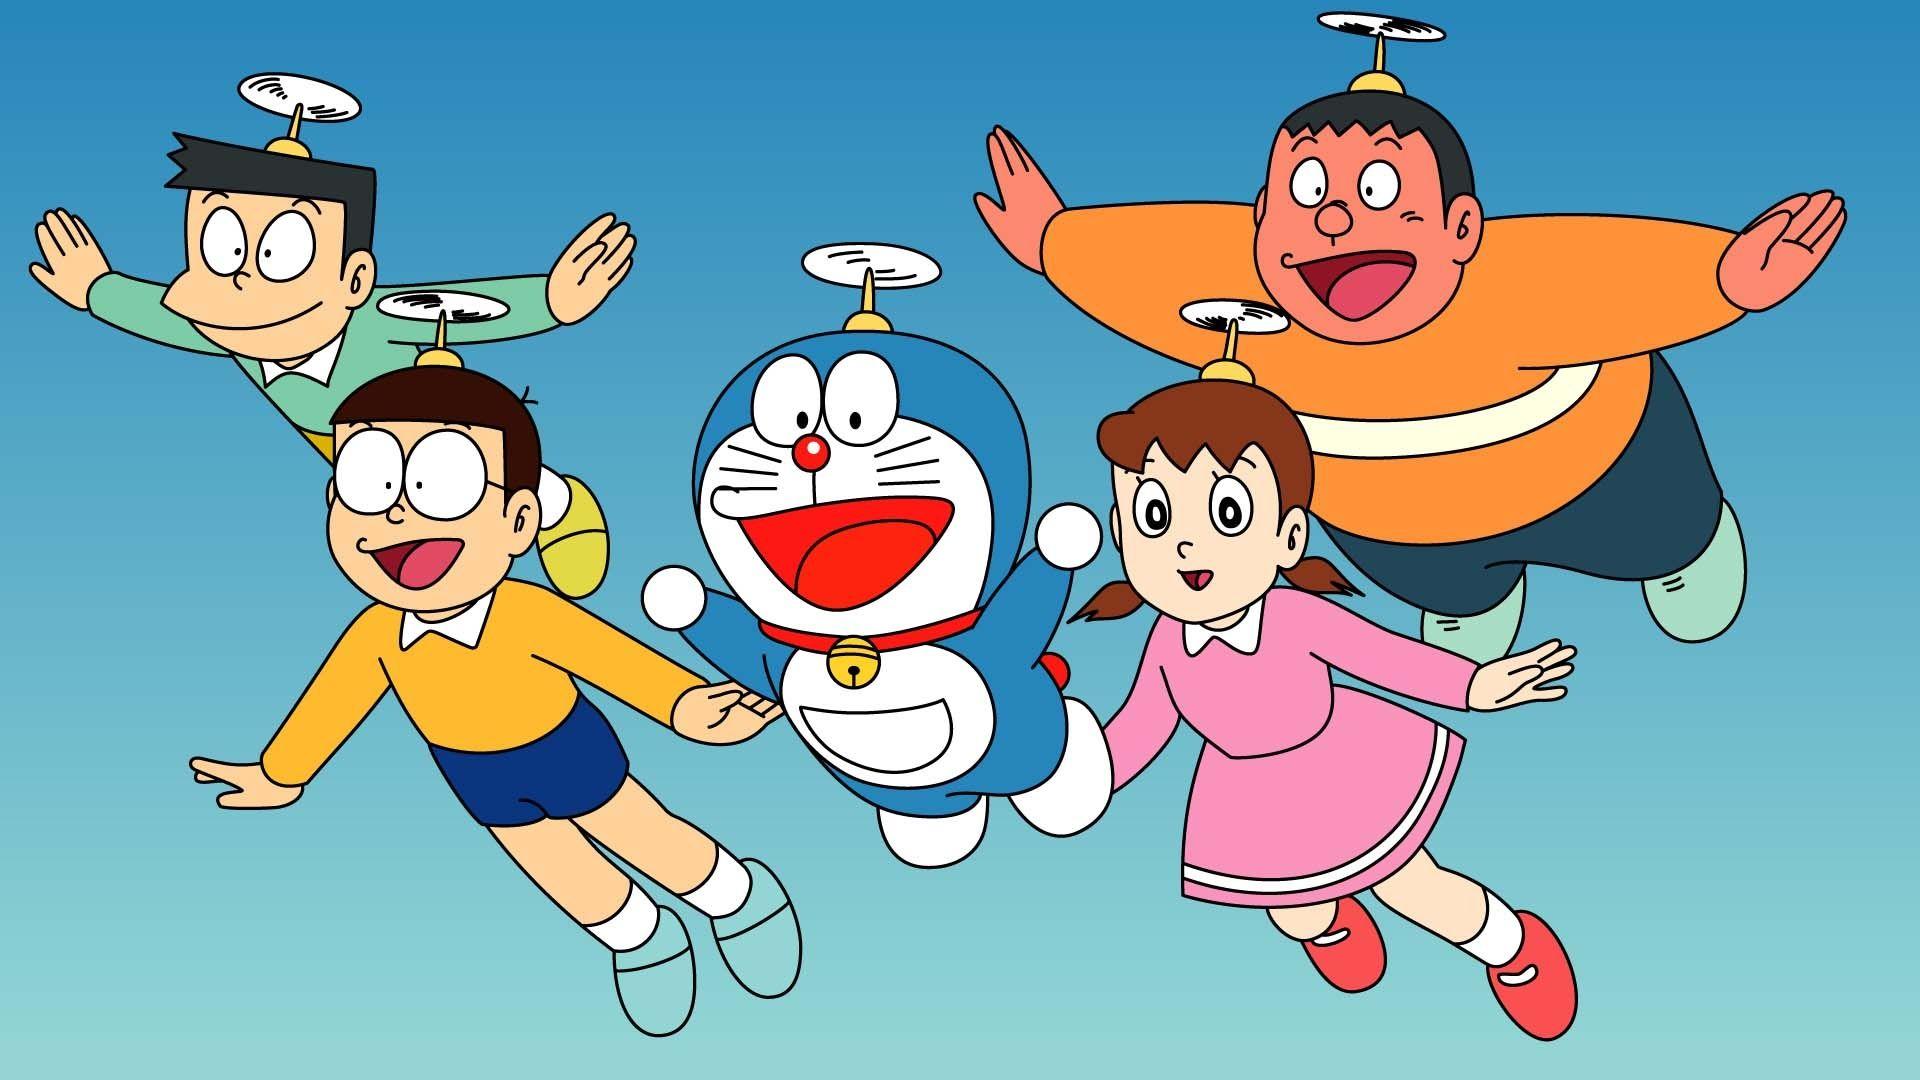 Doraemon Wallpaper 46108 1920x1080 px